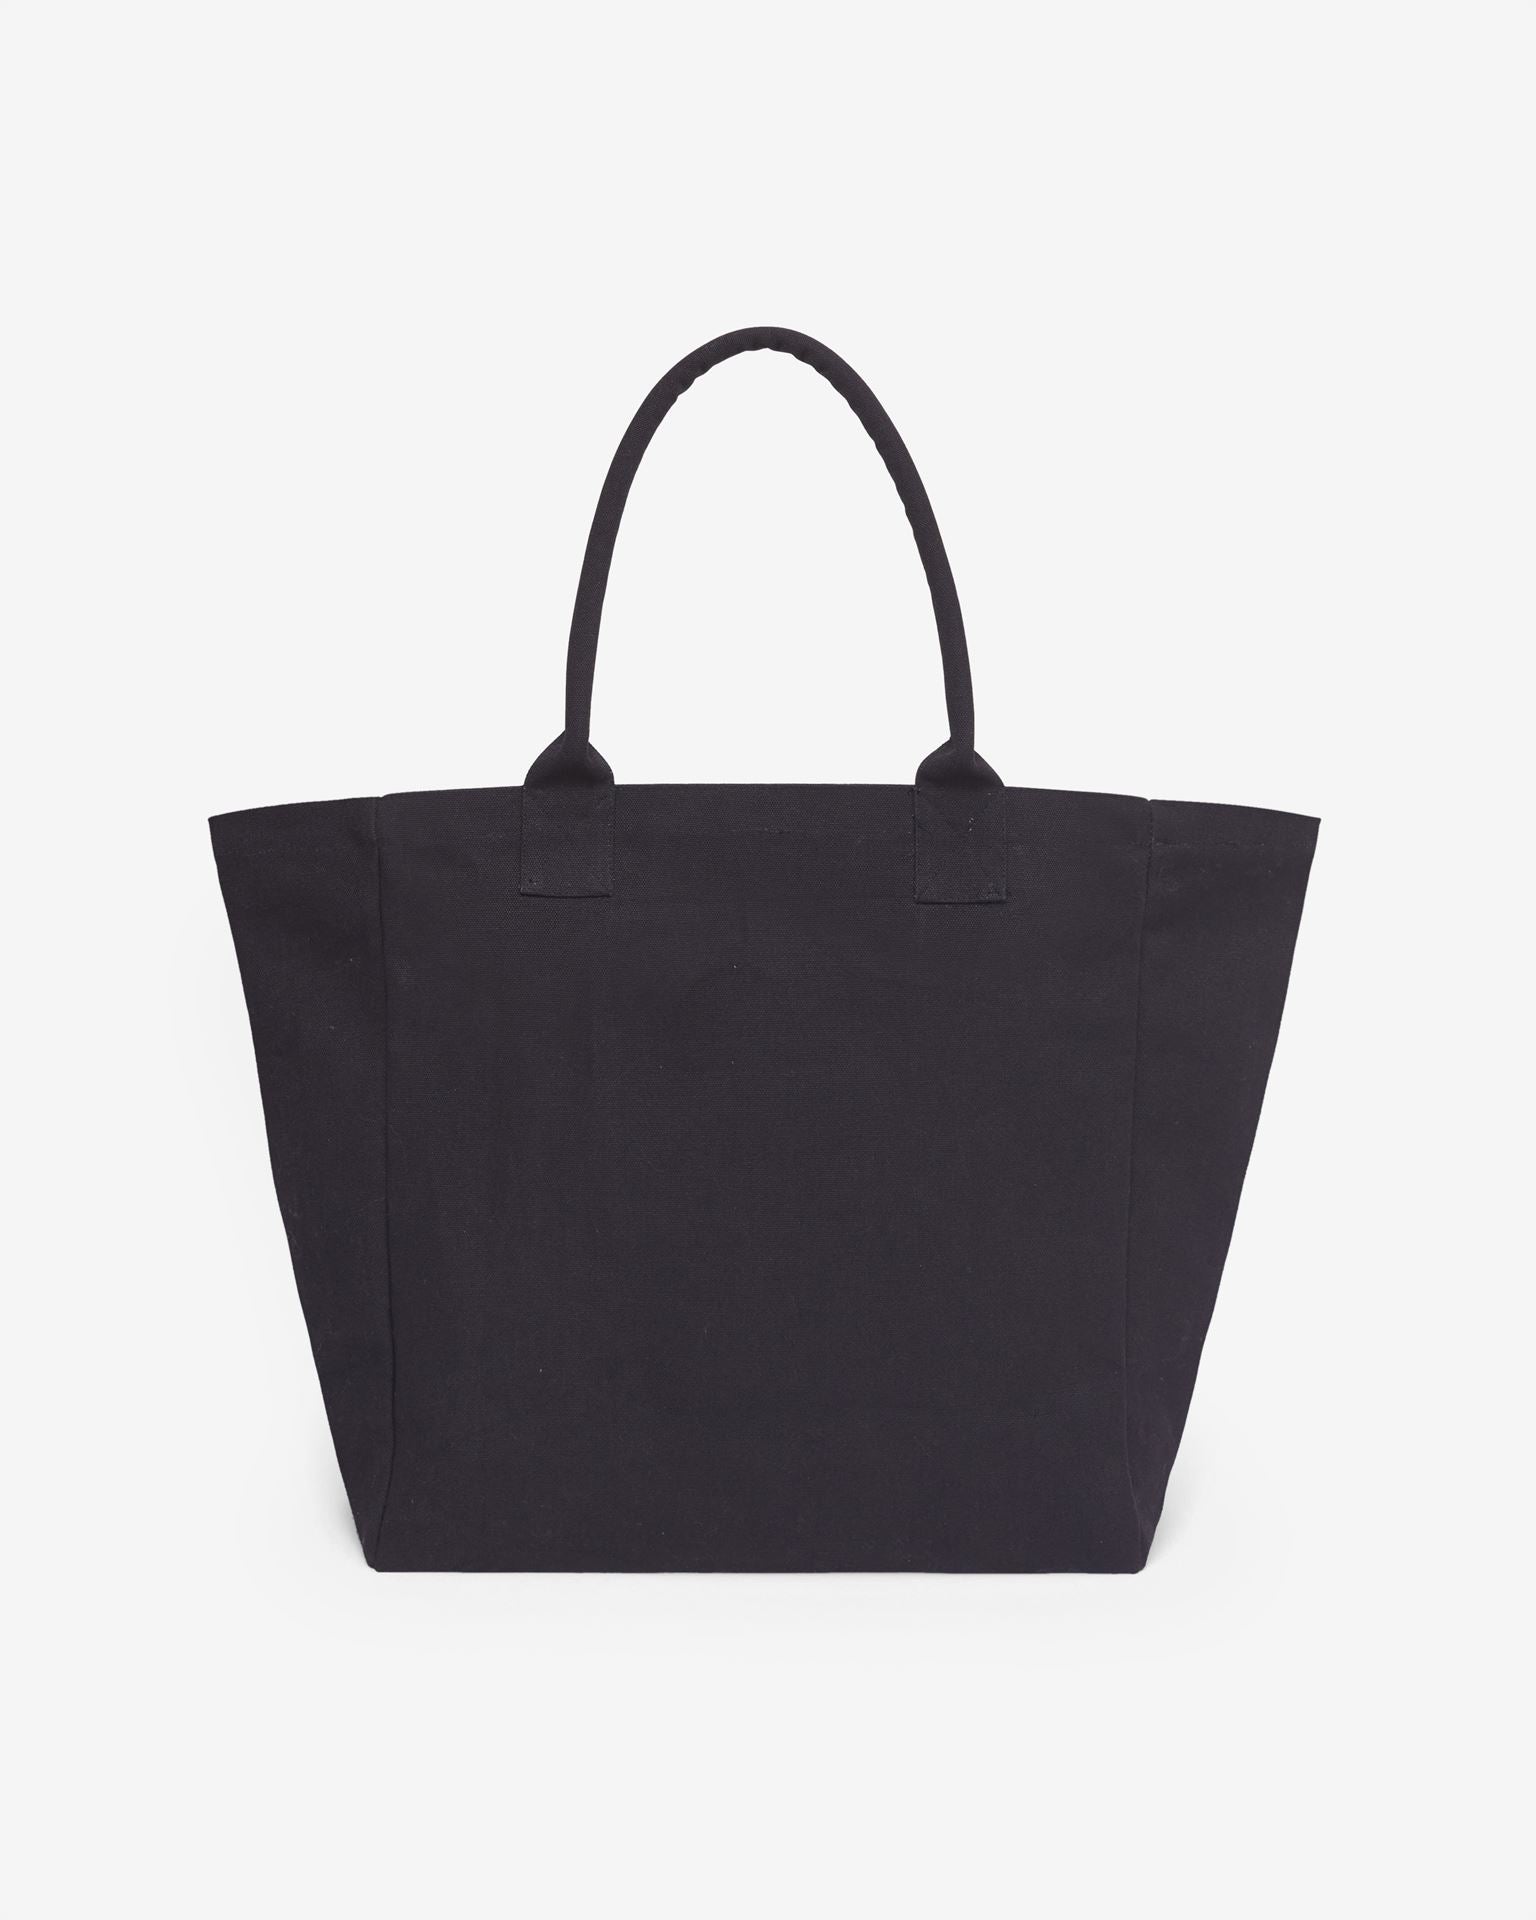 Yenky bag, black